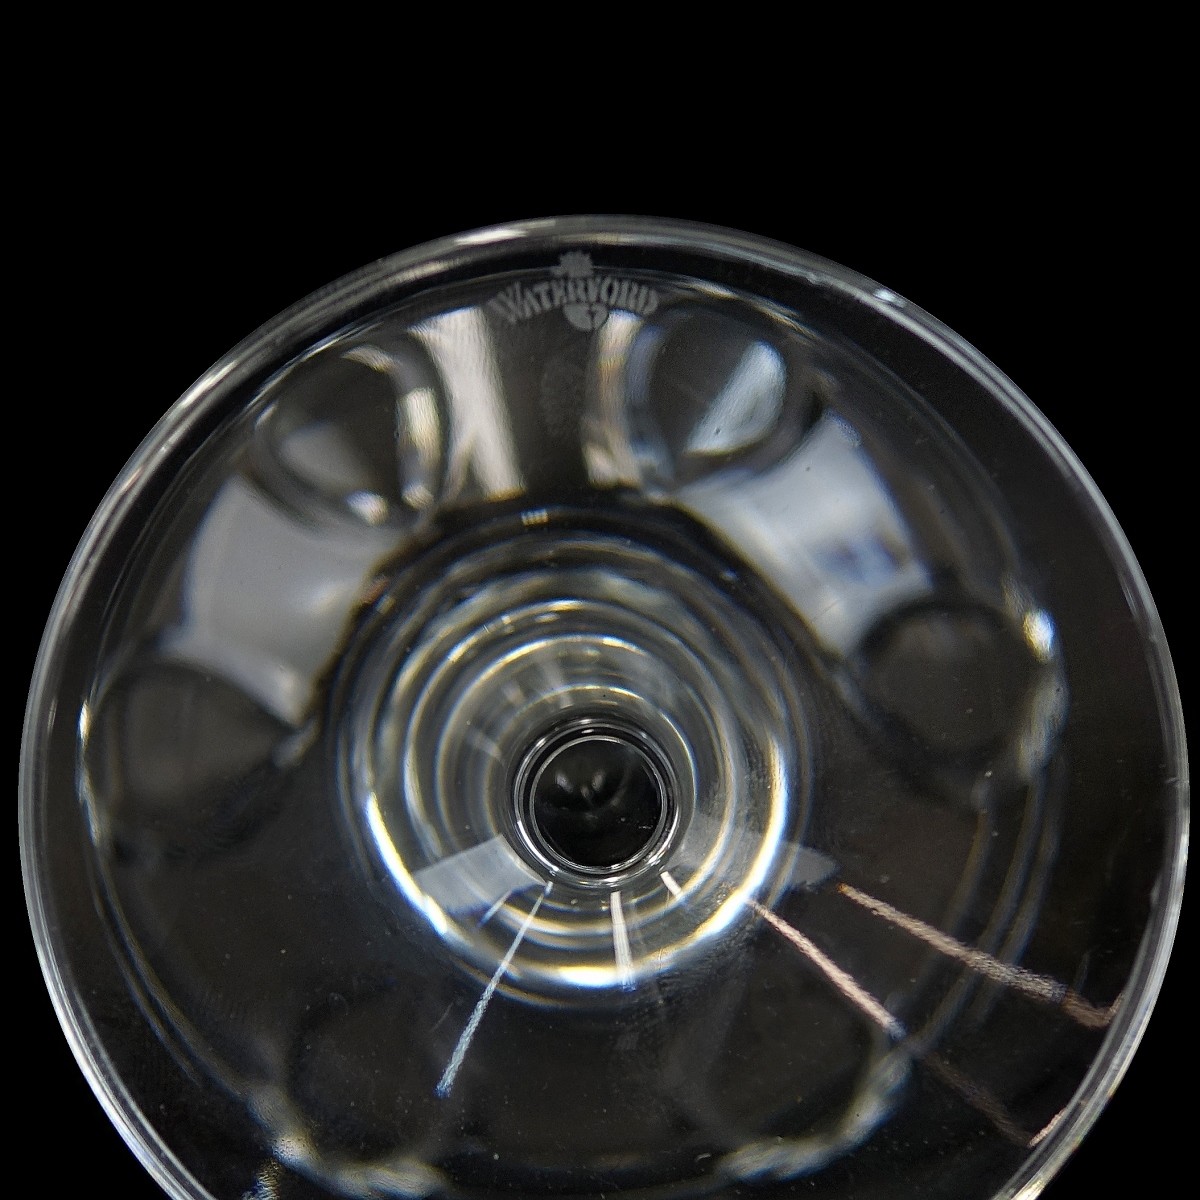 Ten (10) Waterford "Clannad" Claret Wine Glasses